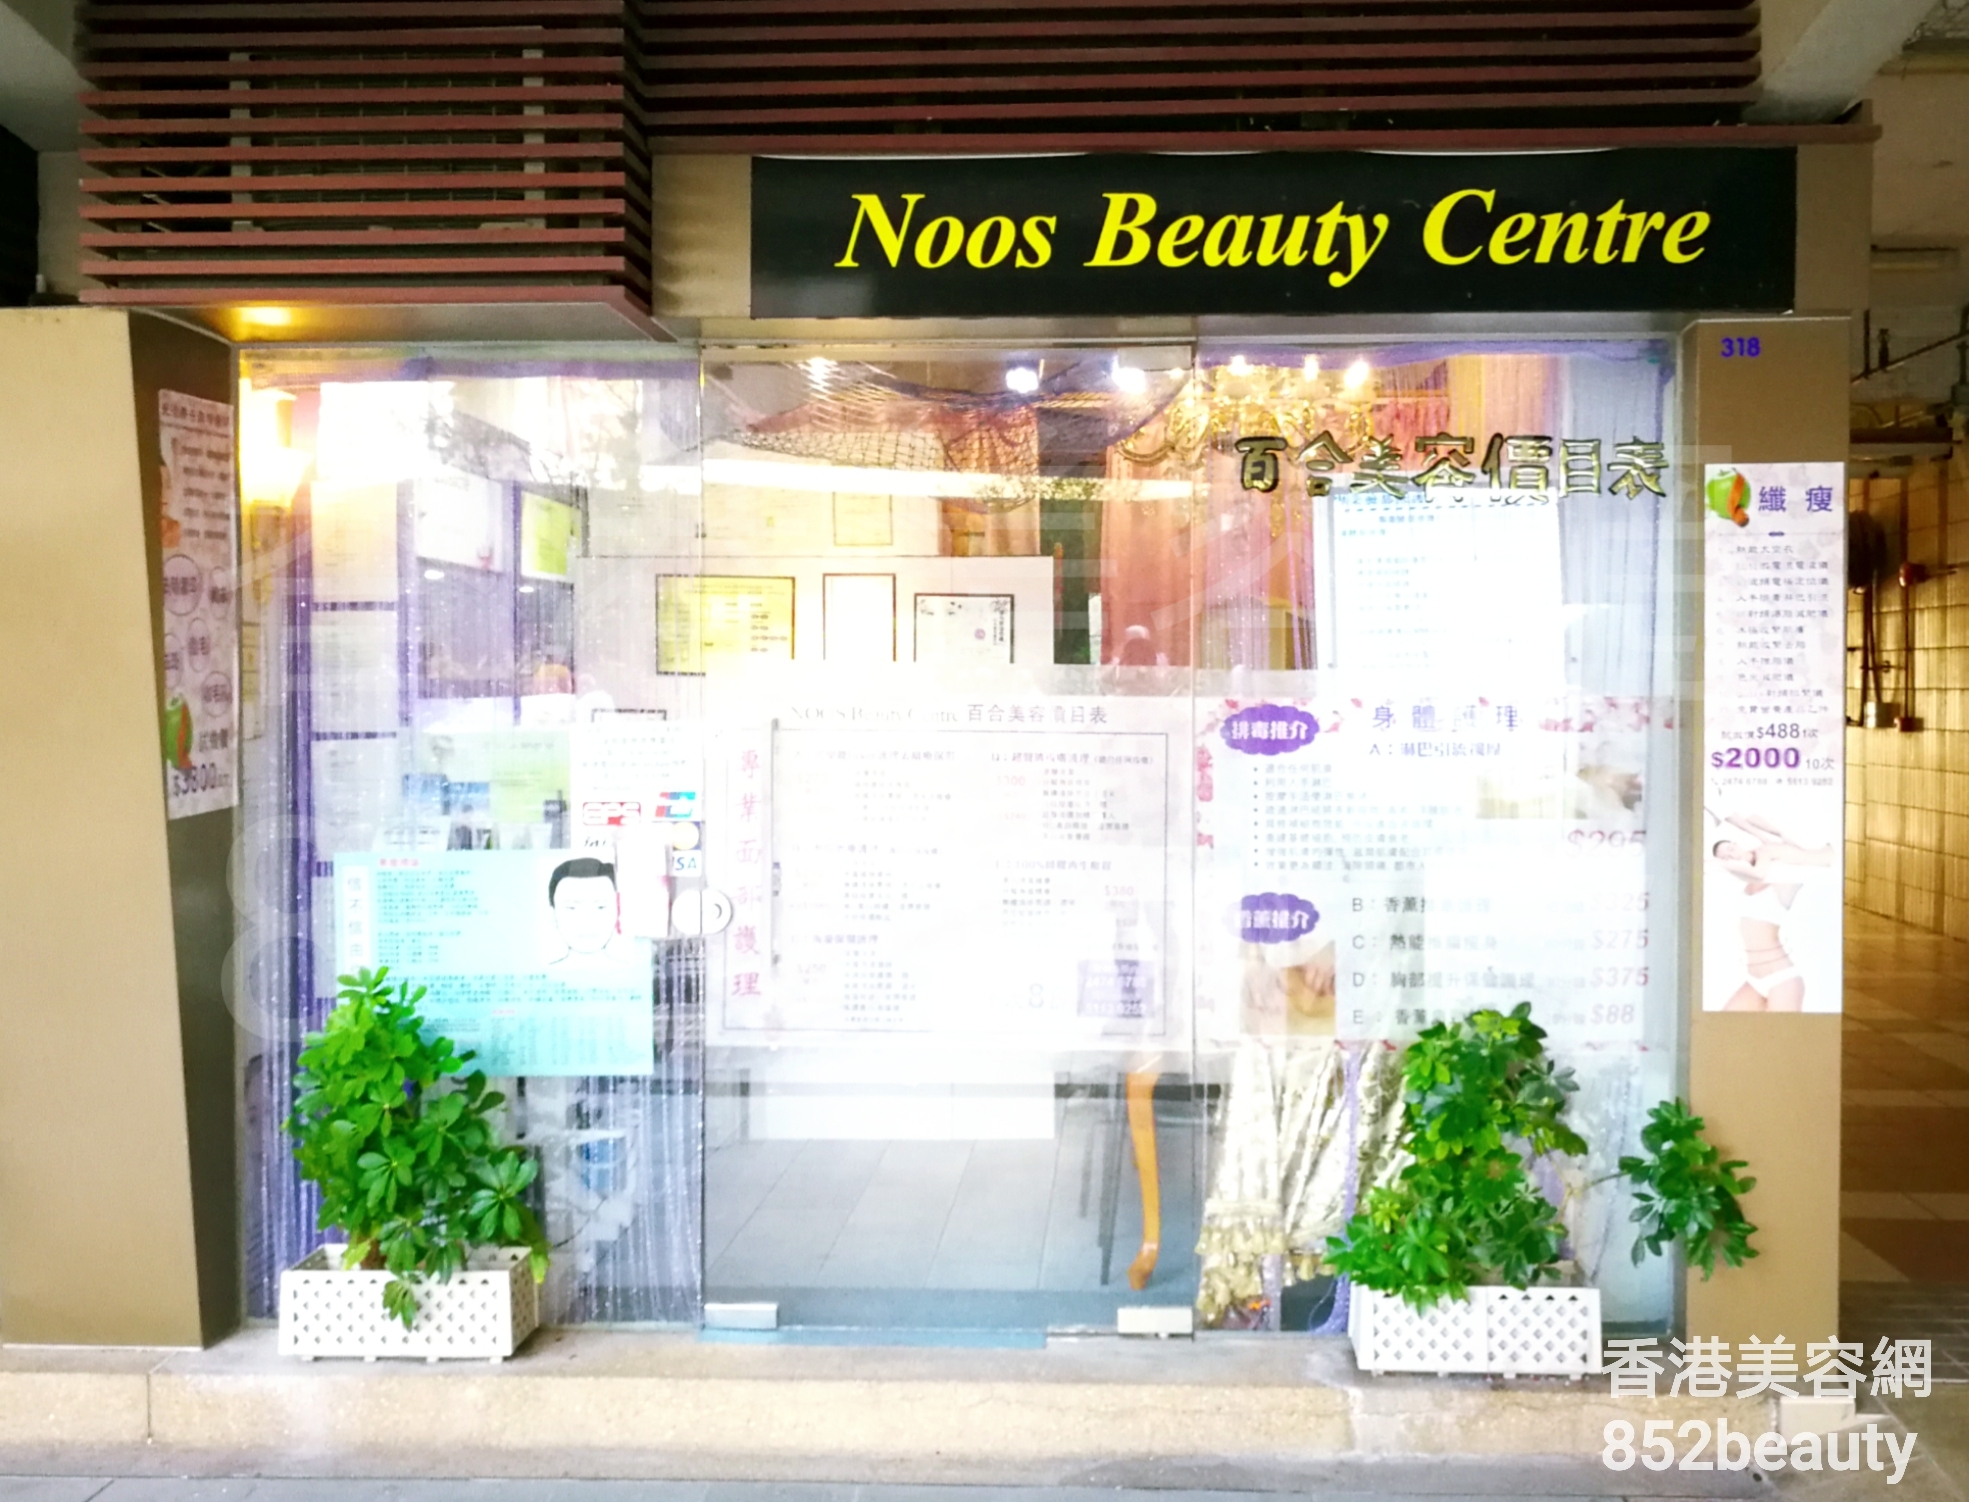 面部护理: Noos Beauty Centre